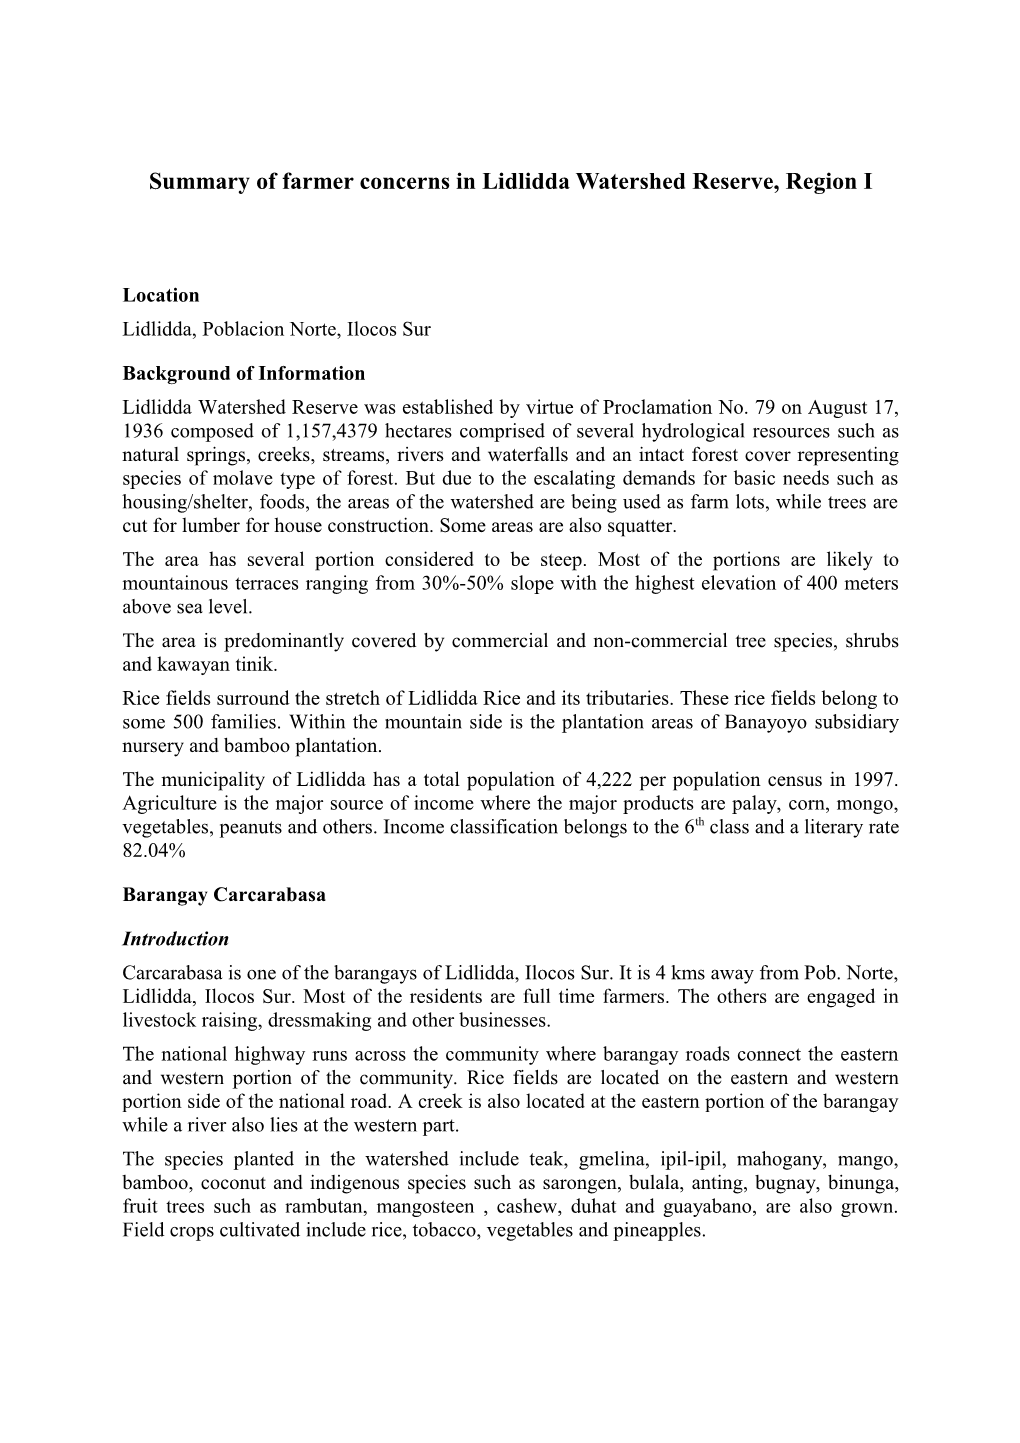 Summary of Farmer Concerns in Lidlidda Watershed Reserve, Region I